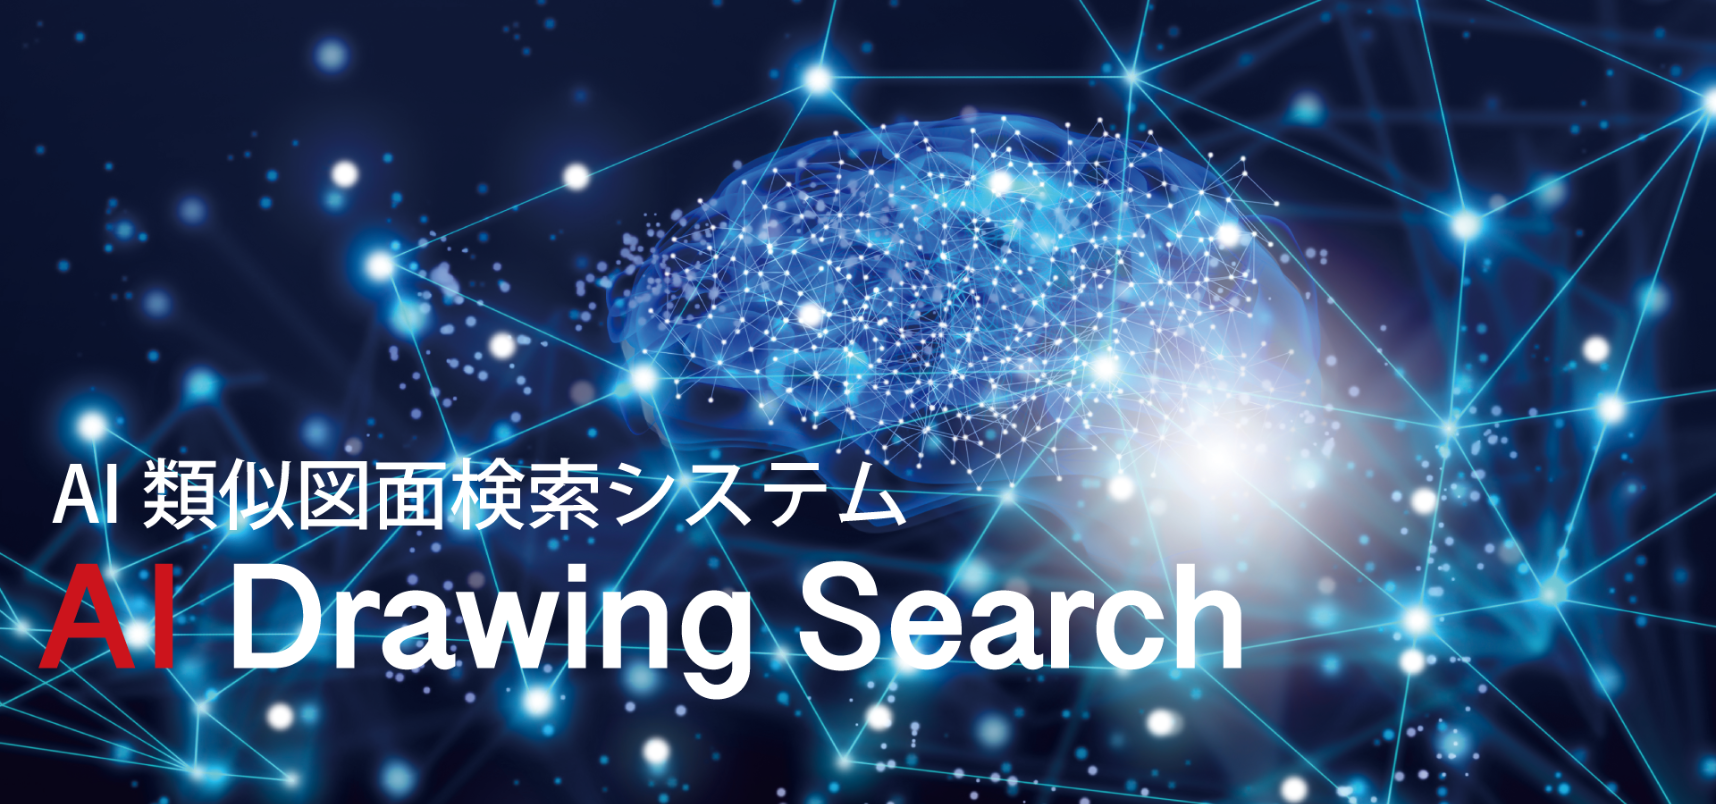 Ai類似図面検索システム Ai Drawing Search 製造業 高志インテック